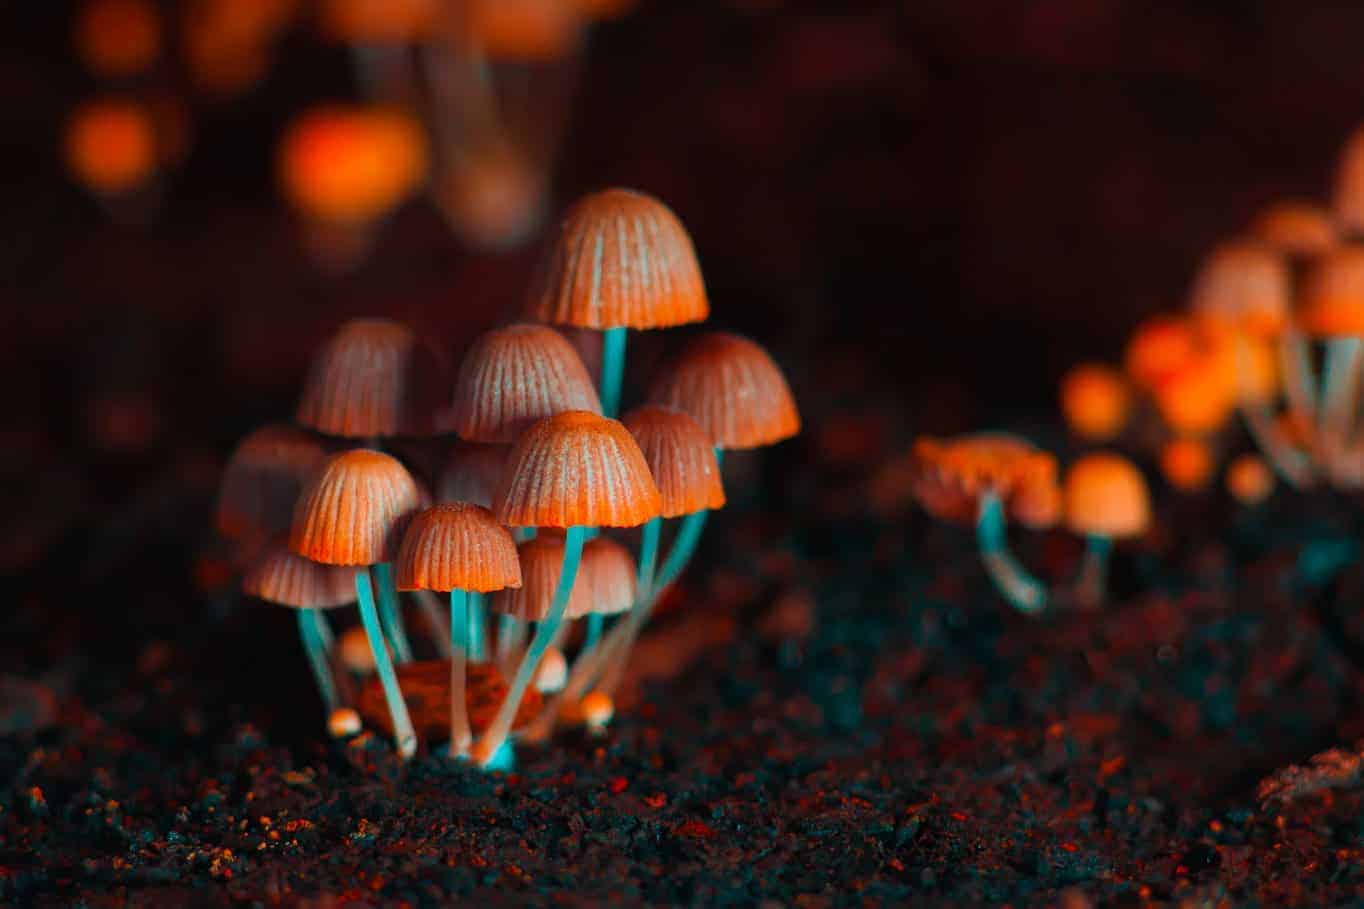 Orange Psilocybin Mushrooms Growing out of Dirt